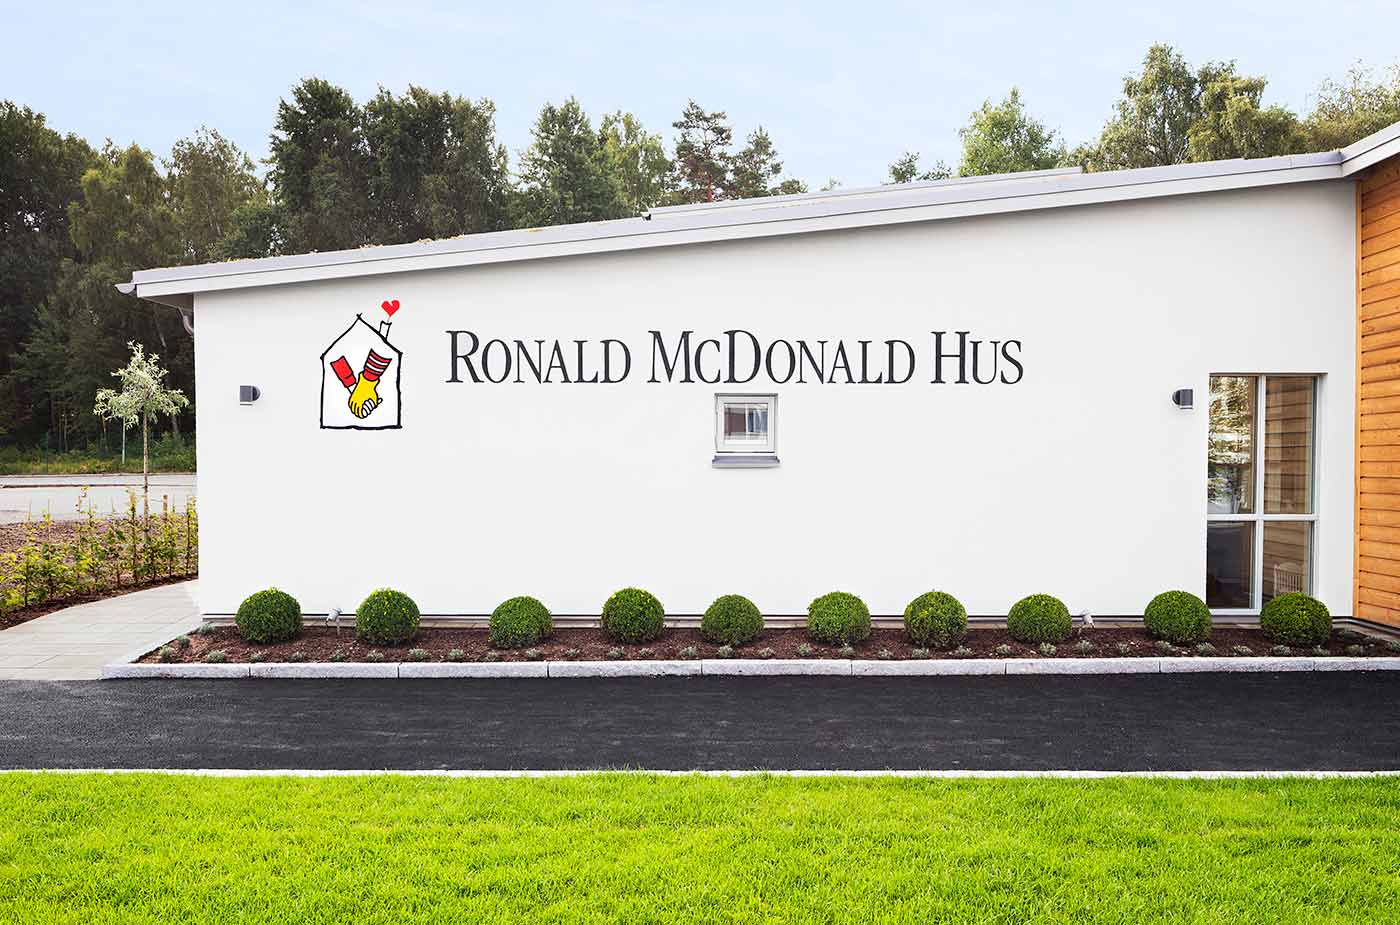 Ronald McDonald hus